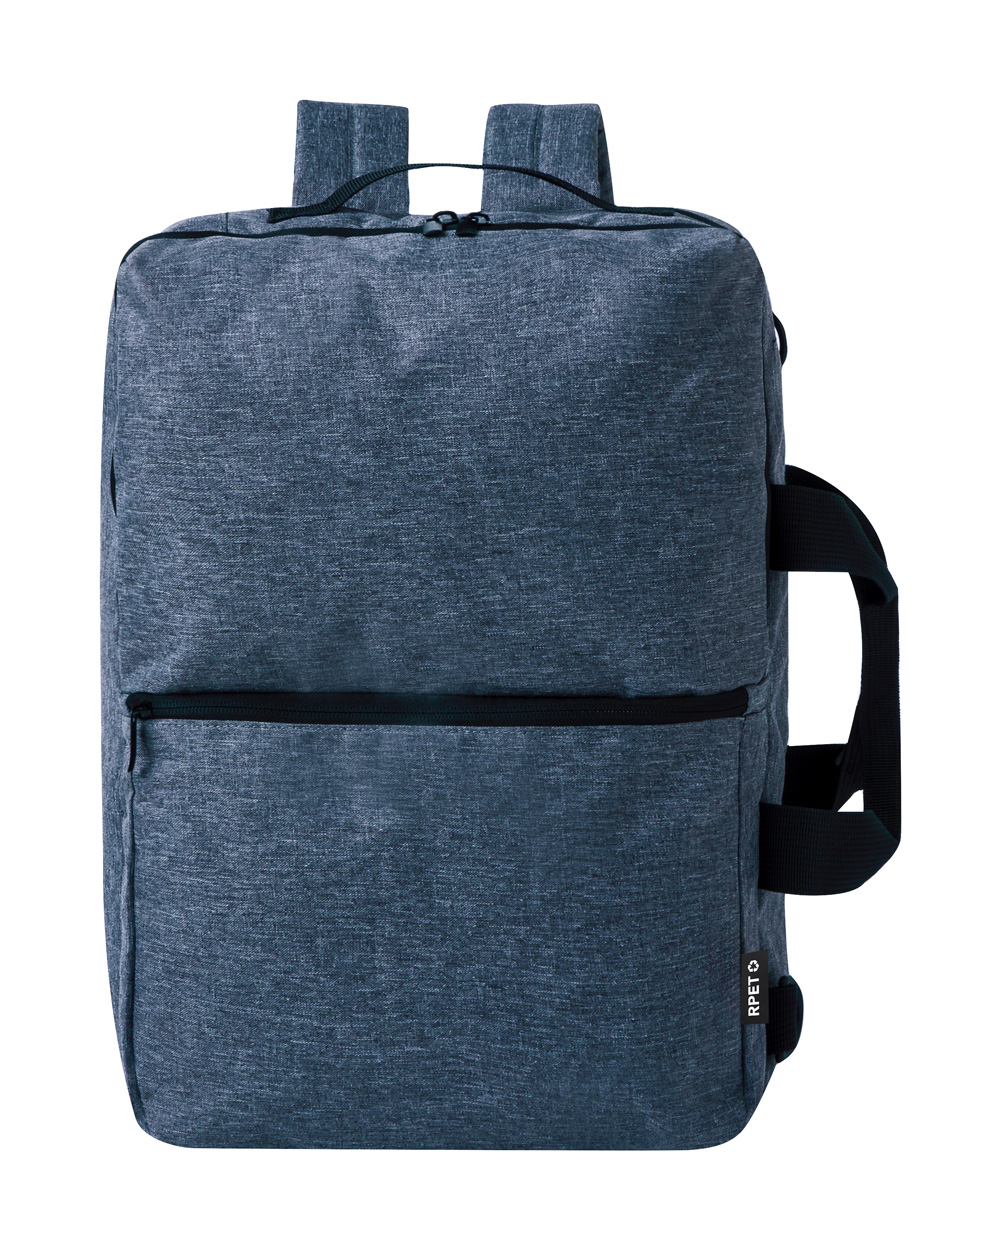 Makarzur RPET backpack for documents - blau